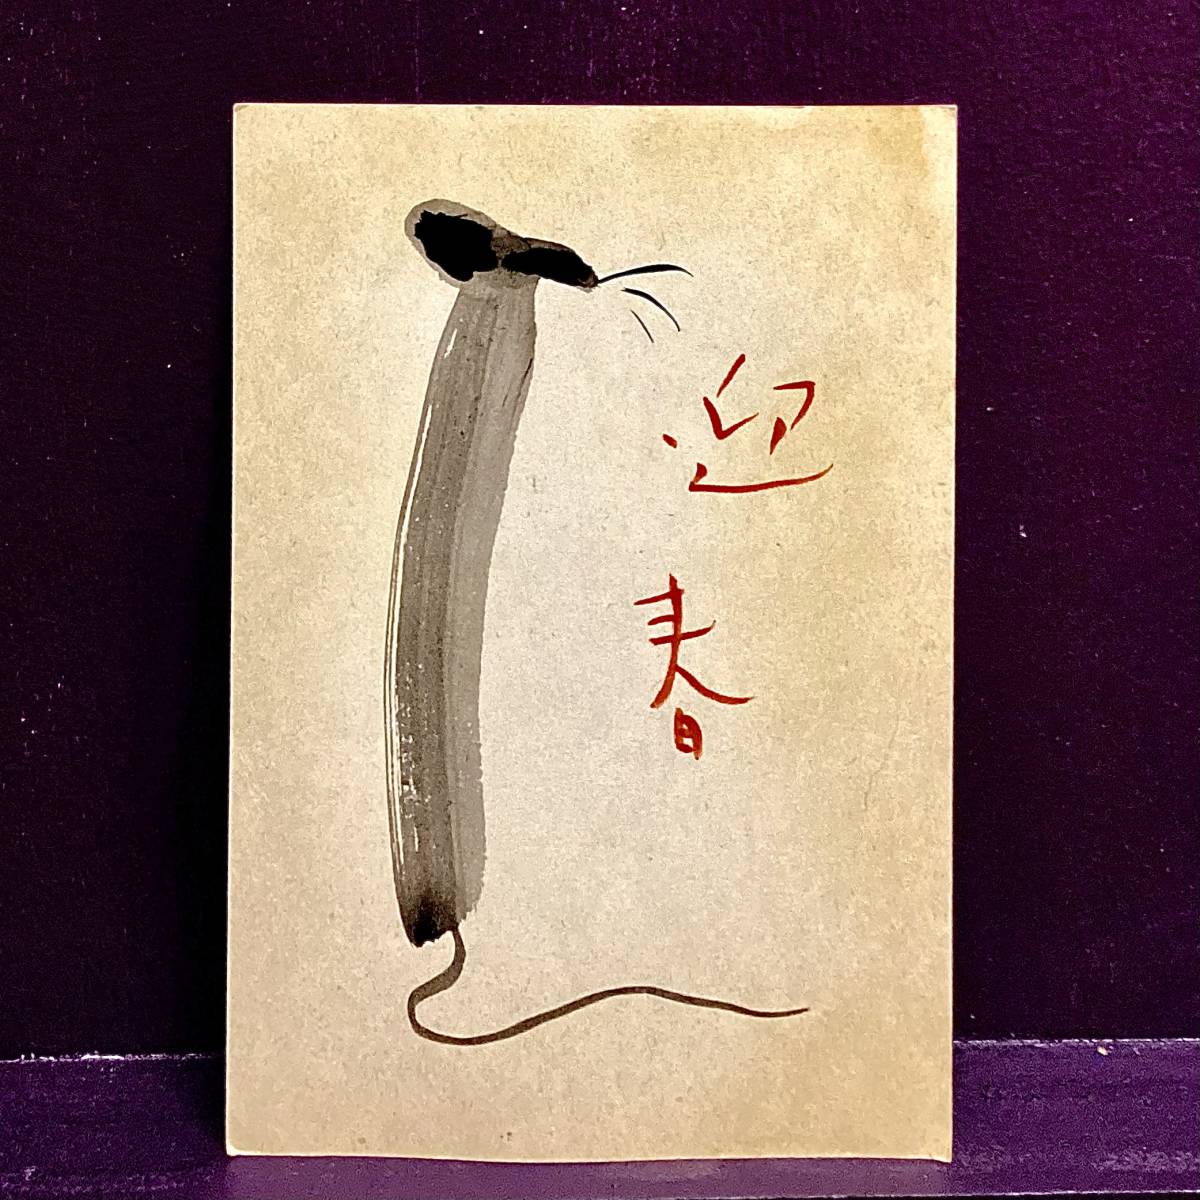 ★कियोशी सैतो/सैतो कियोशी/पोस्टकार्ड/चूहा वर्ष/चूहा/नए साल का कार्ड/हस्तलिखित, शौक, संस्कृति, कलाकृति, अन्य